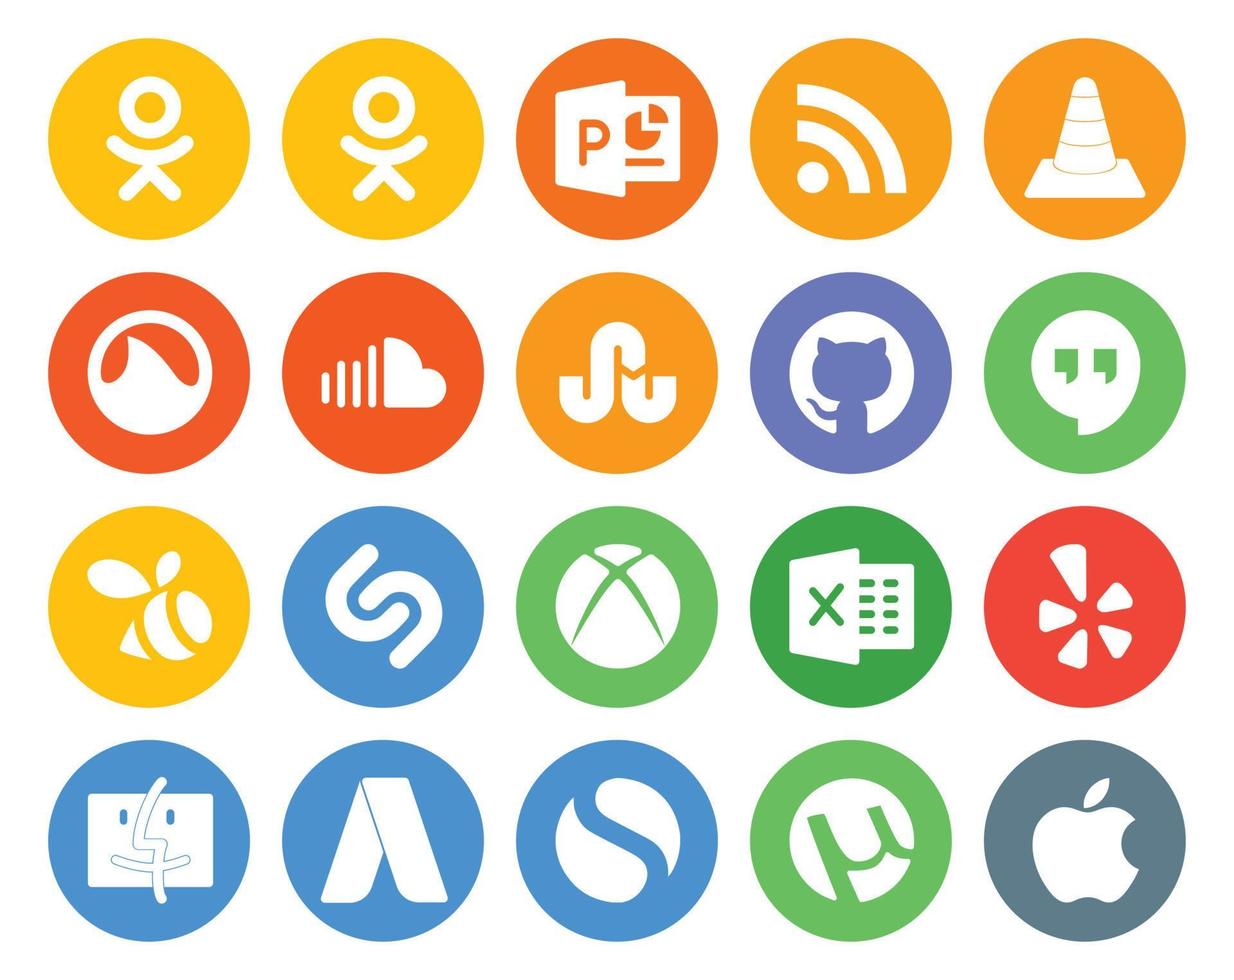 20 paquetes de íconos de redes sociales que incluyen yelp xbox sound shazam hangouts vector